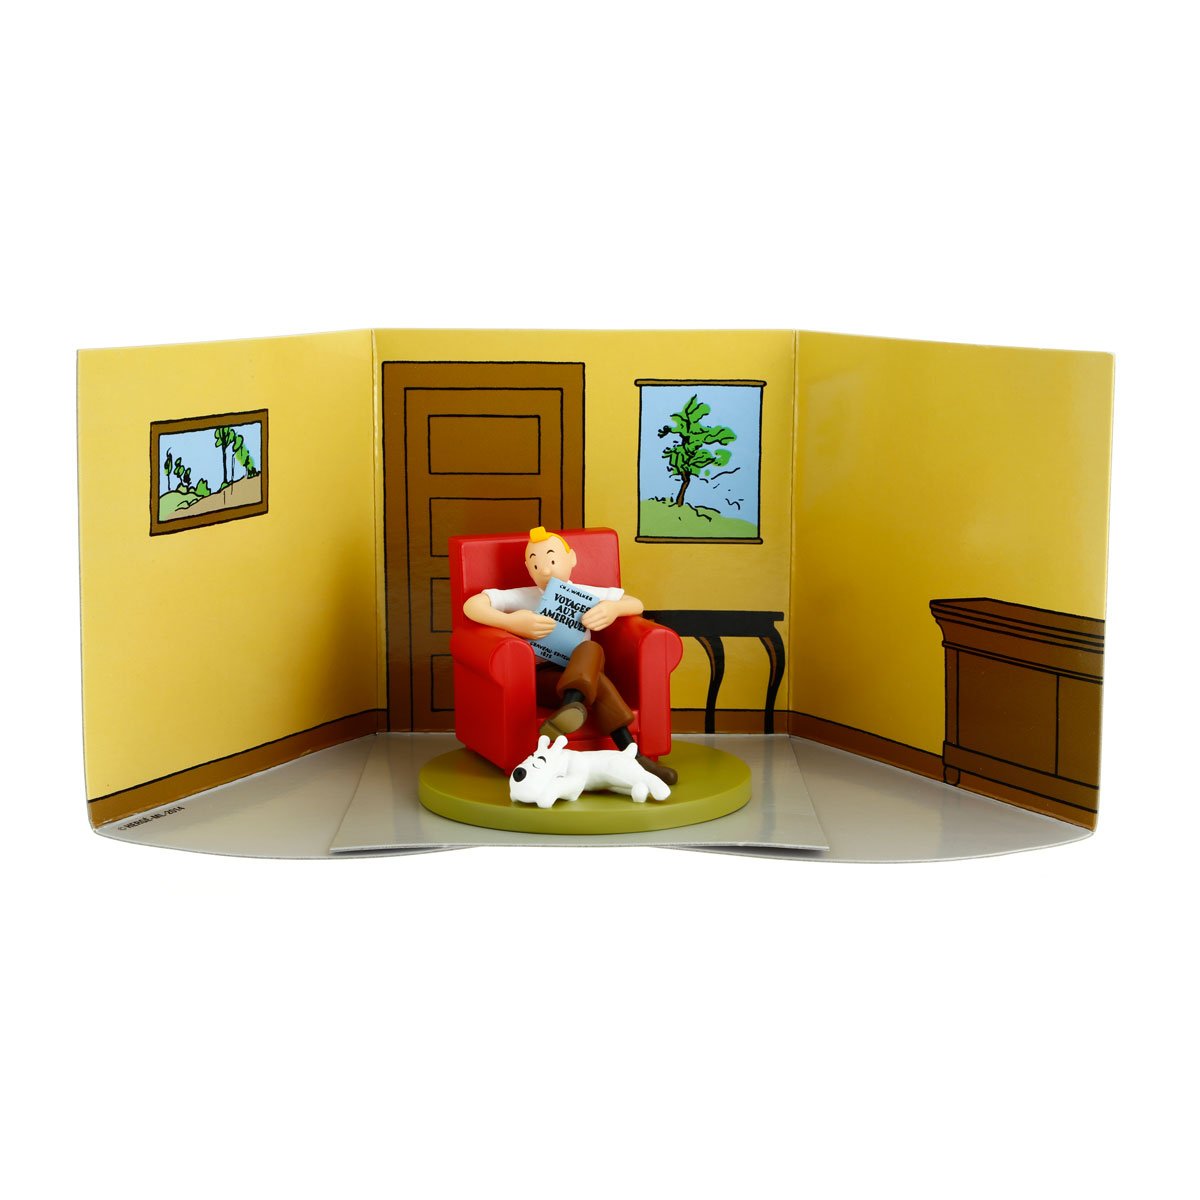 Tintin in his armchair